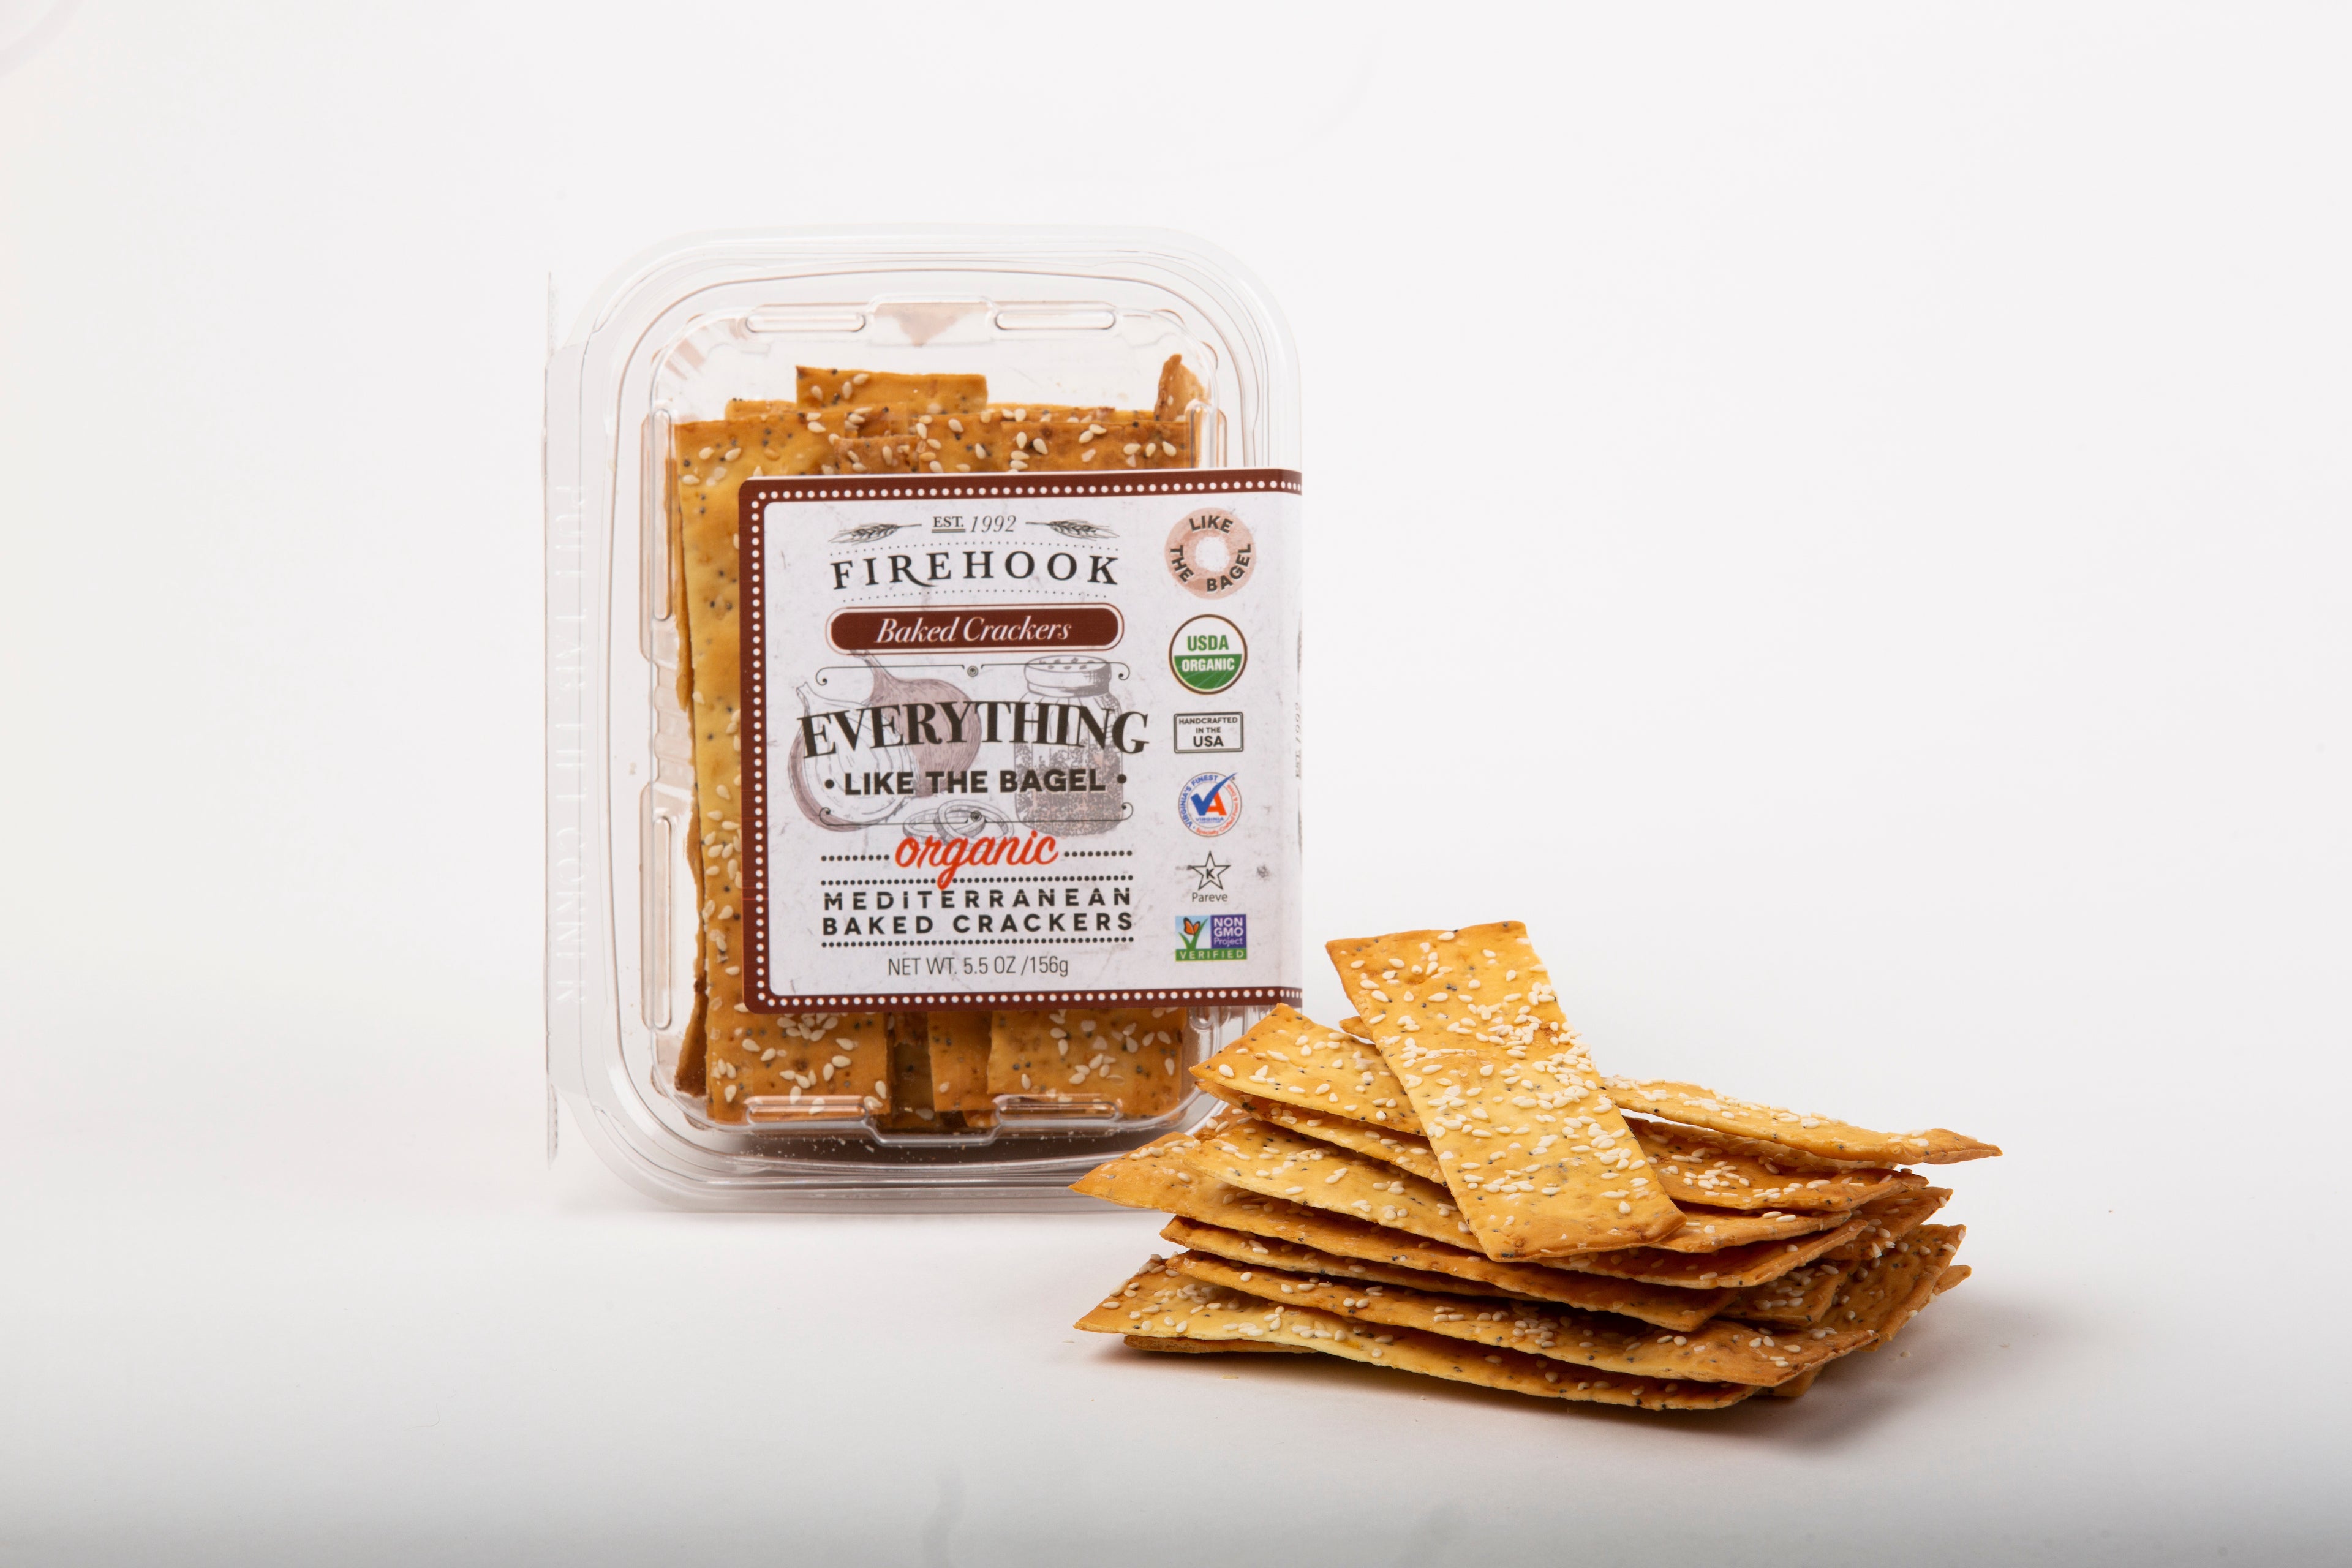 Firehook Mediterranean Baked Crackers - Everything